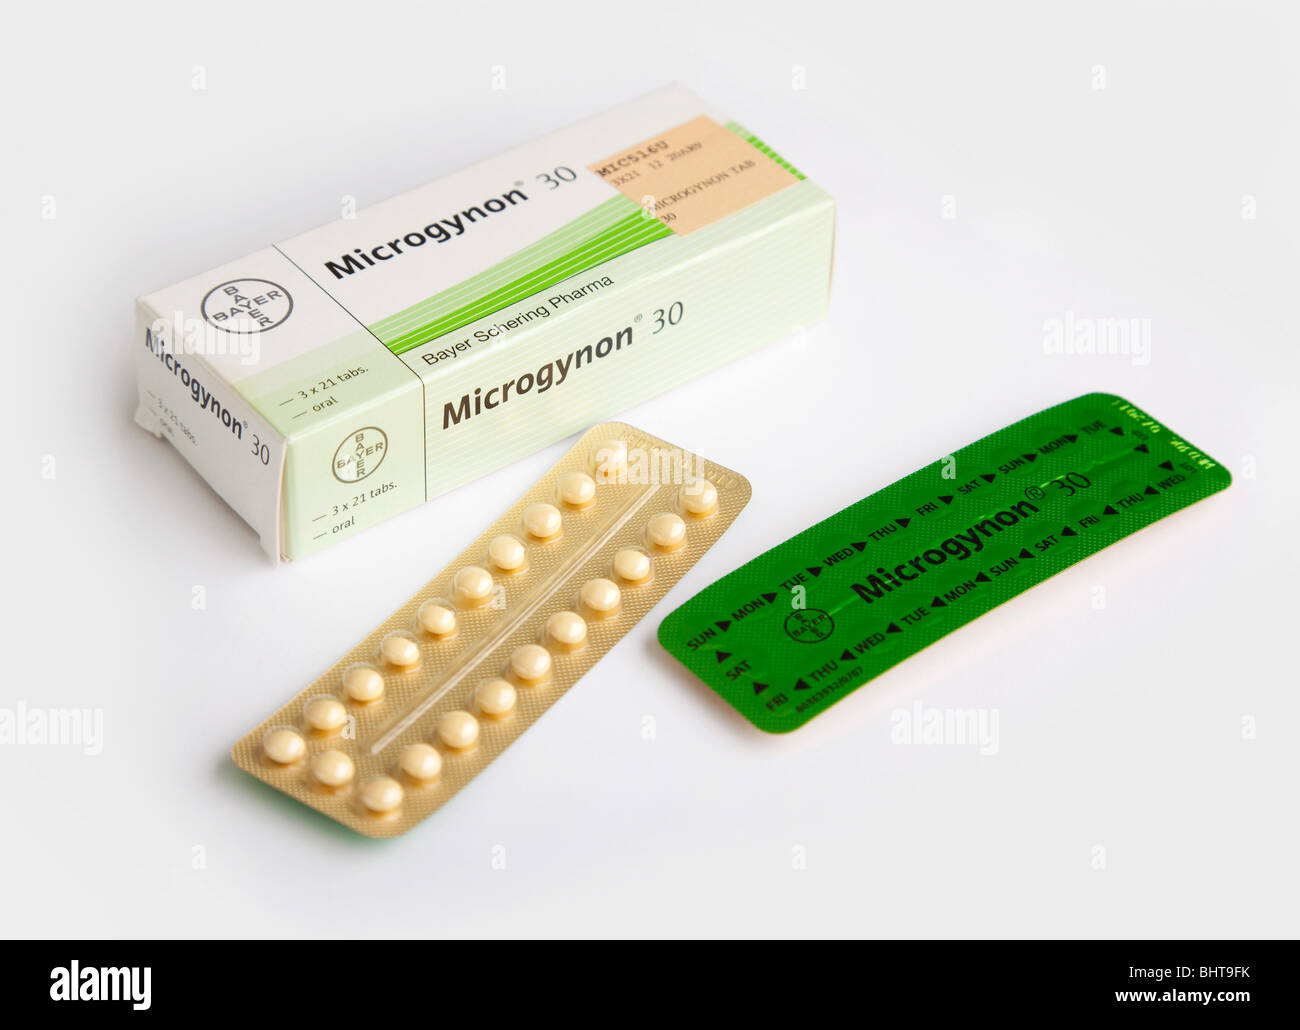 Bayer Microgynon 30 oral contraceptive pills Stock Photo